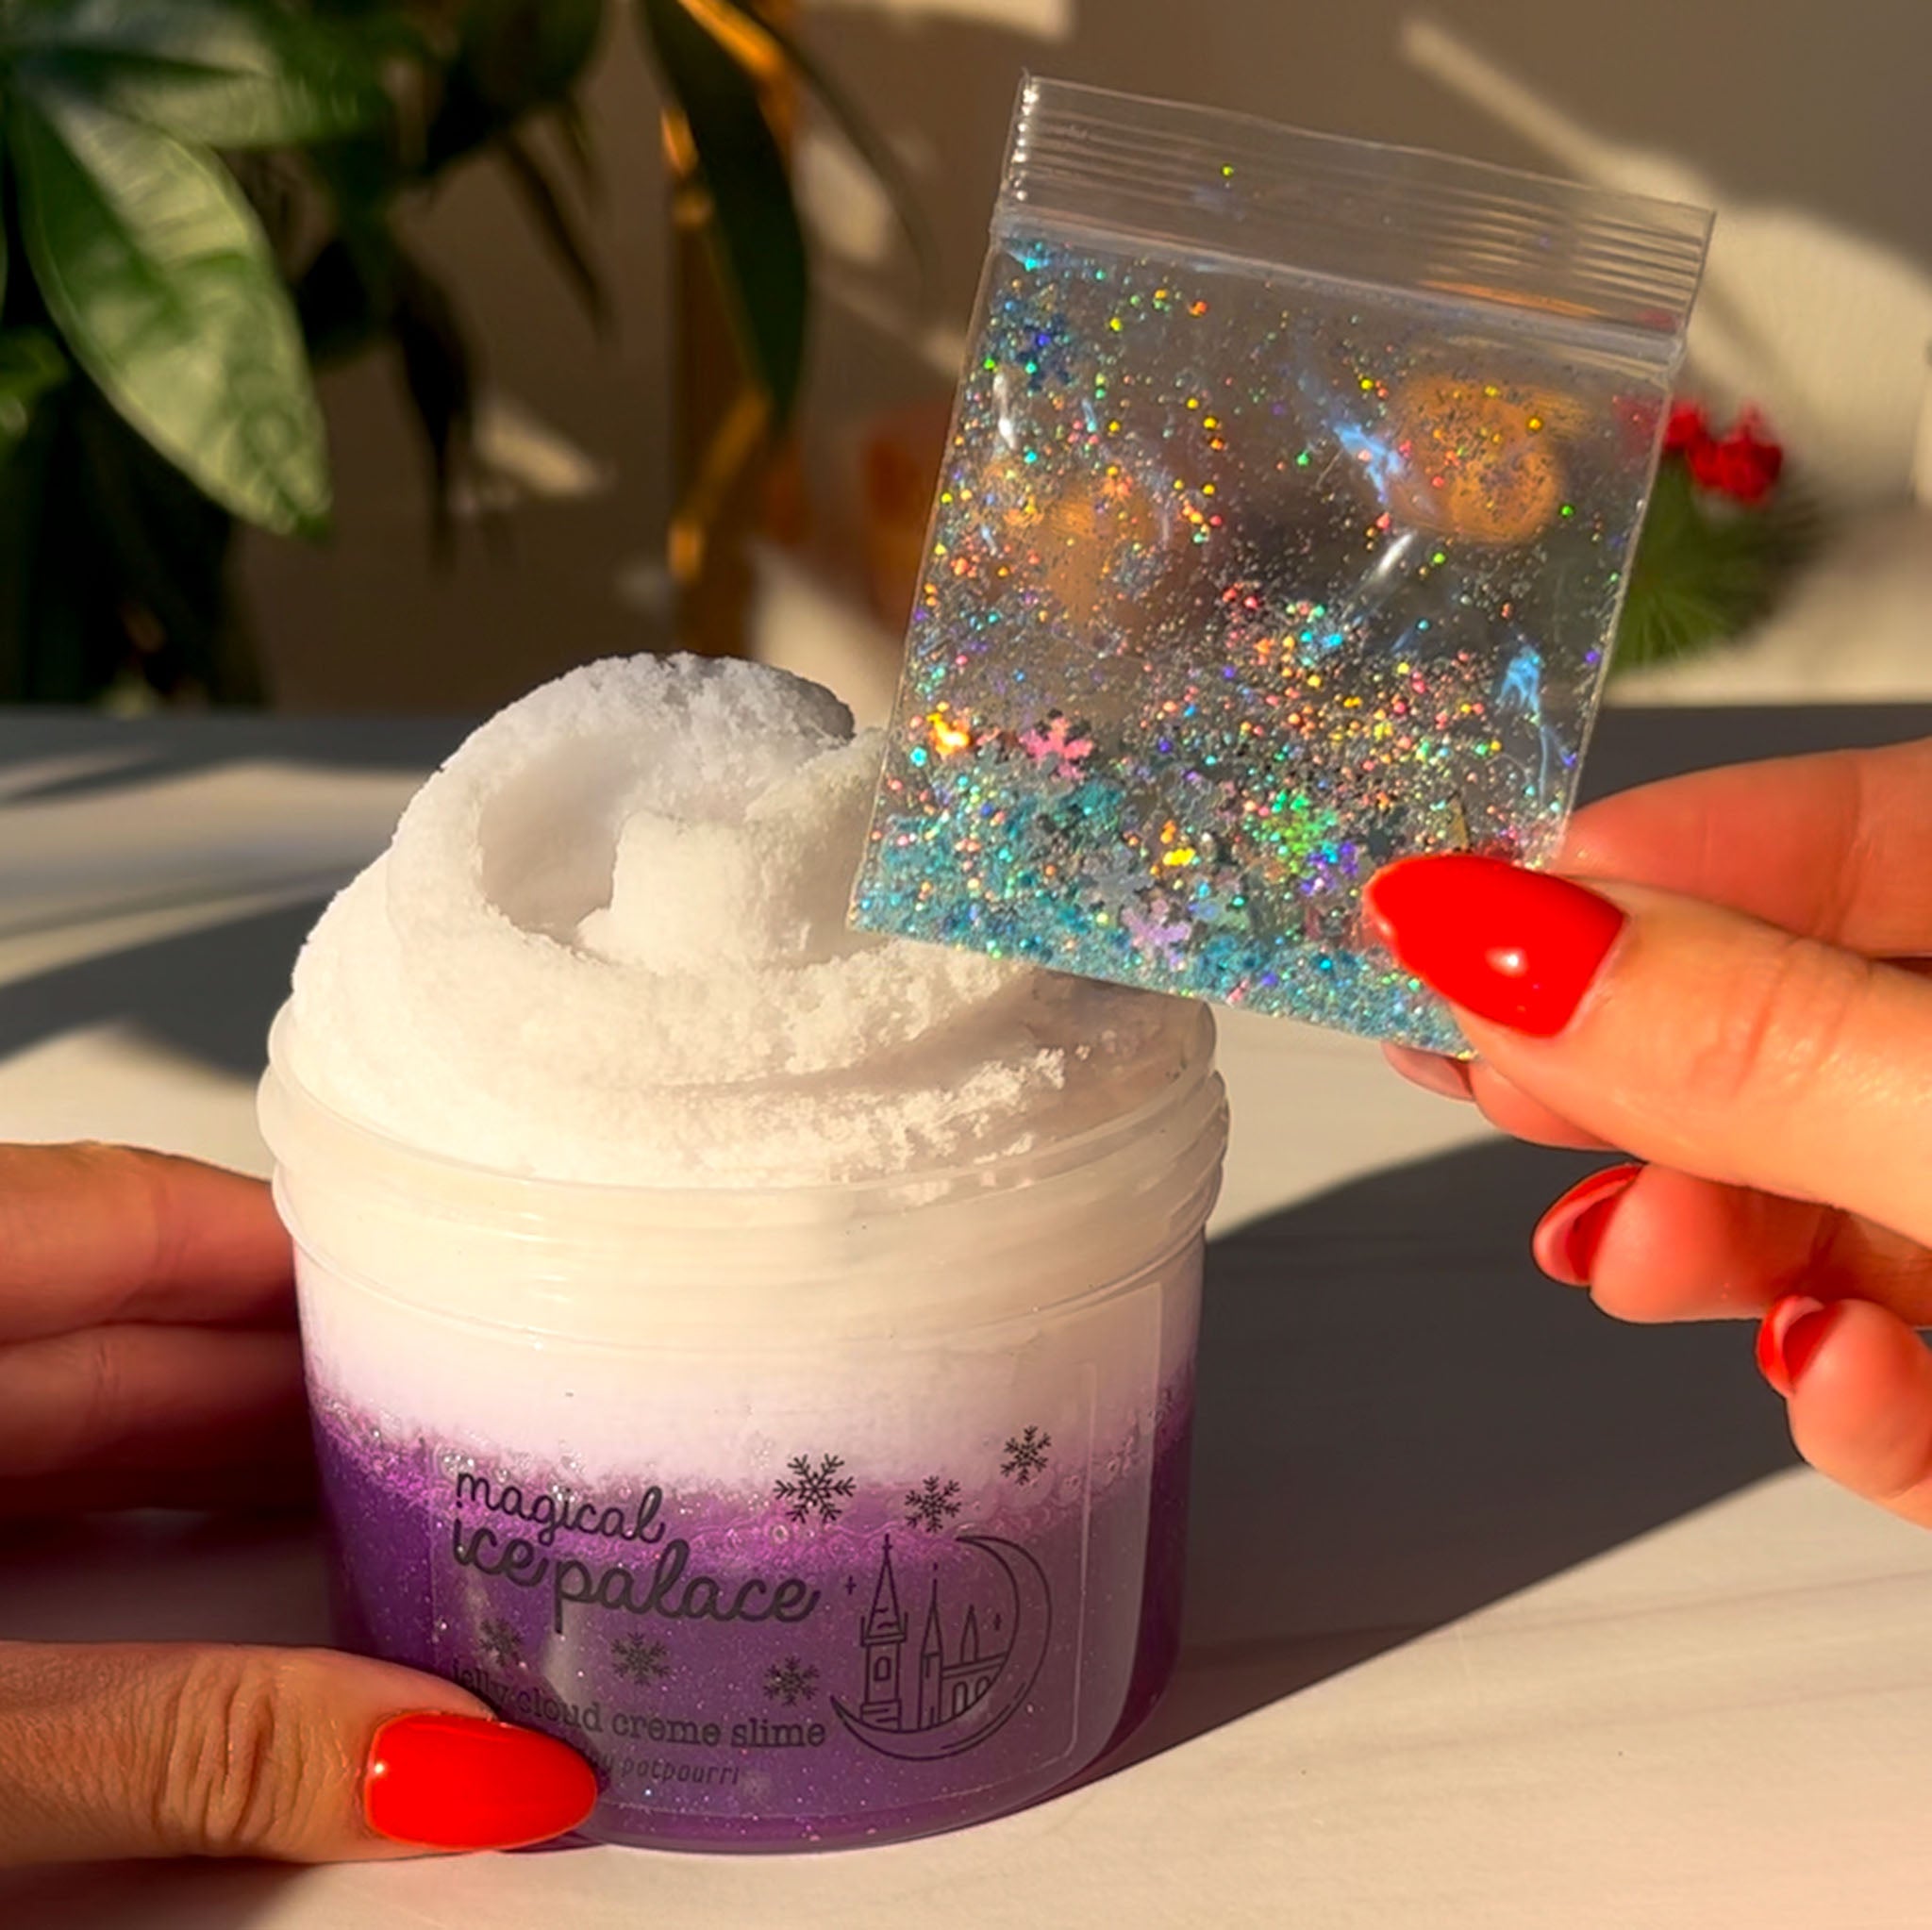 Magical Ice Palace Christmas Winter Glittery Pastel Purple Cloud Creme Slime Fantasies Shop Set